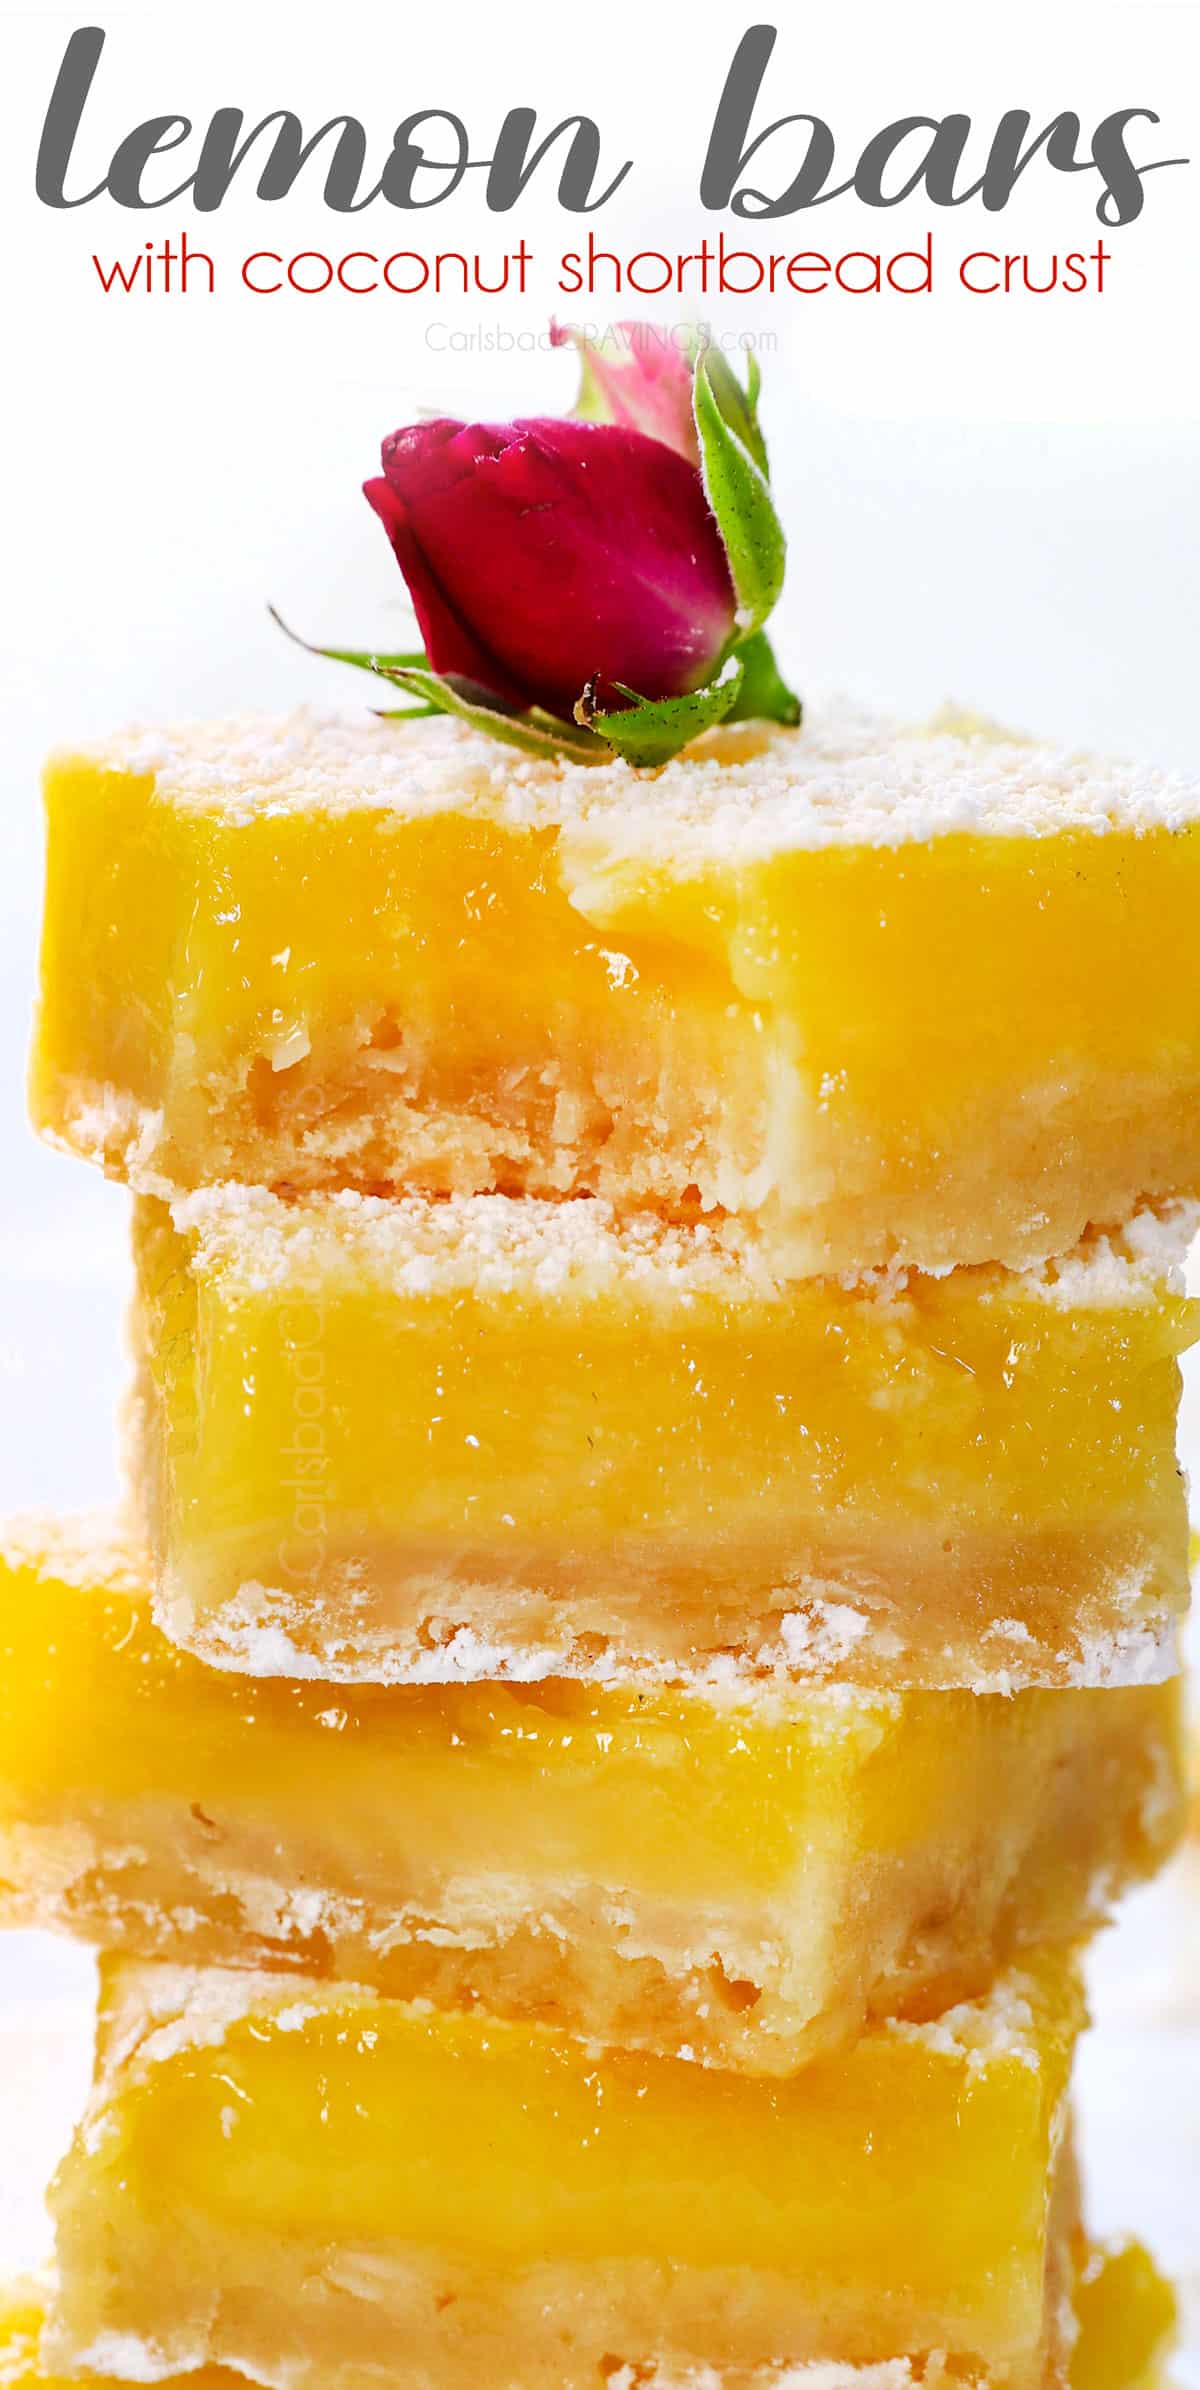 lemon bar recipe showing the bars stacked